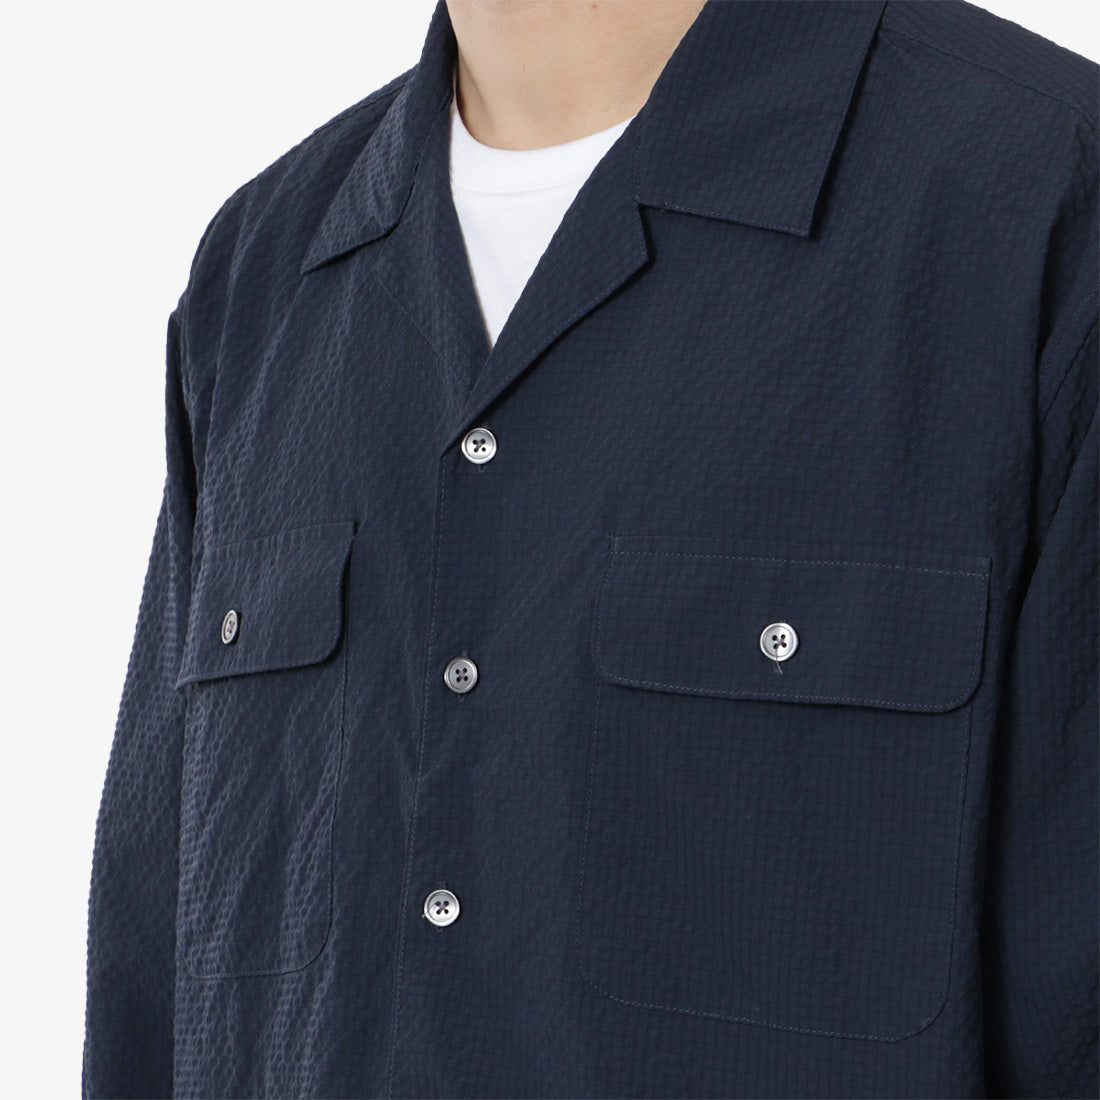 FrizmWORKS Open Collar Solid Seersucker Shirt, Navy, Detail Shot 2